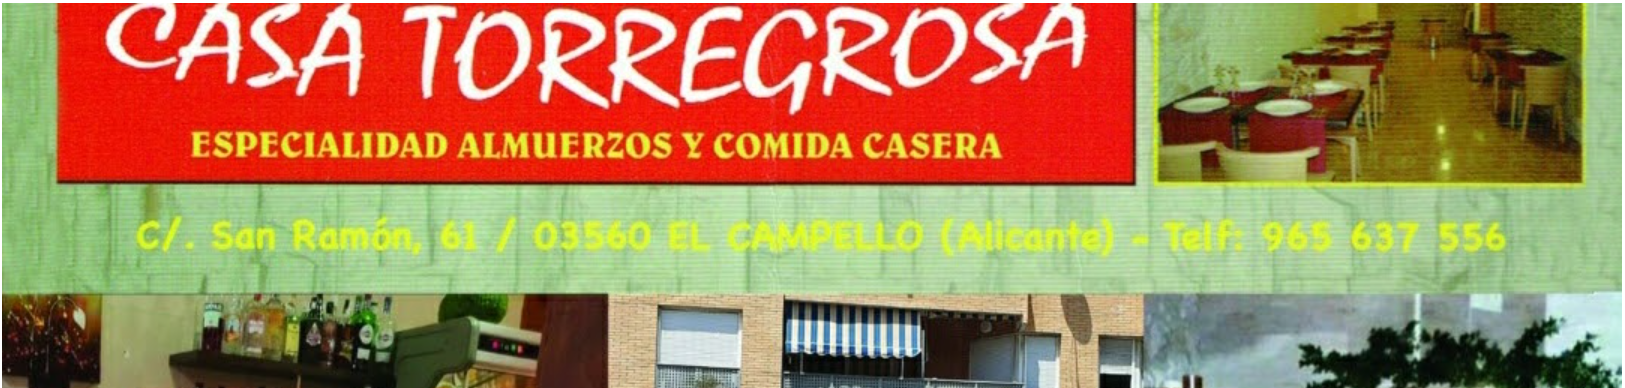 Images Restaurante Casa Torregrosa